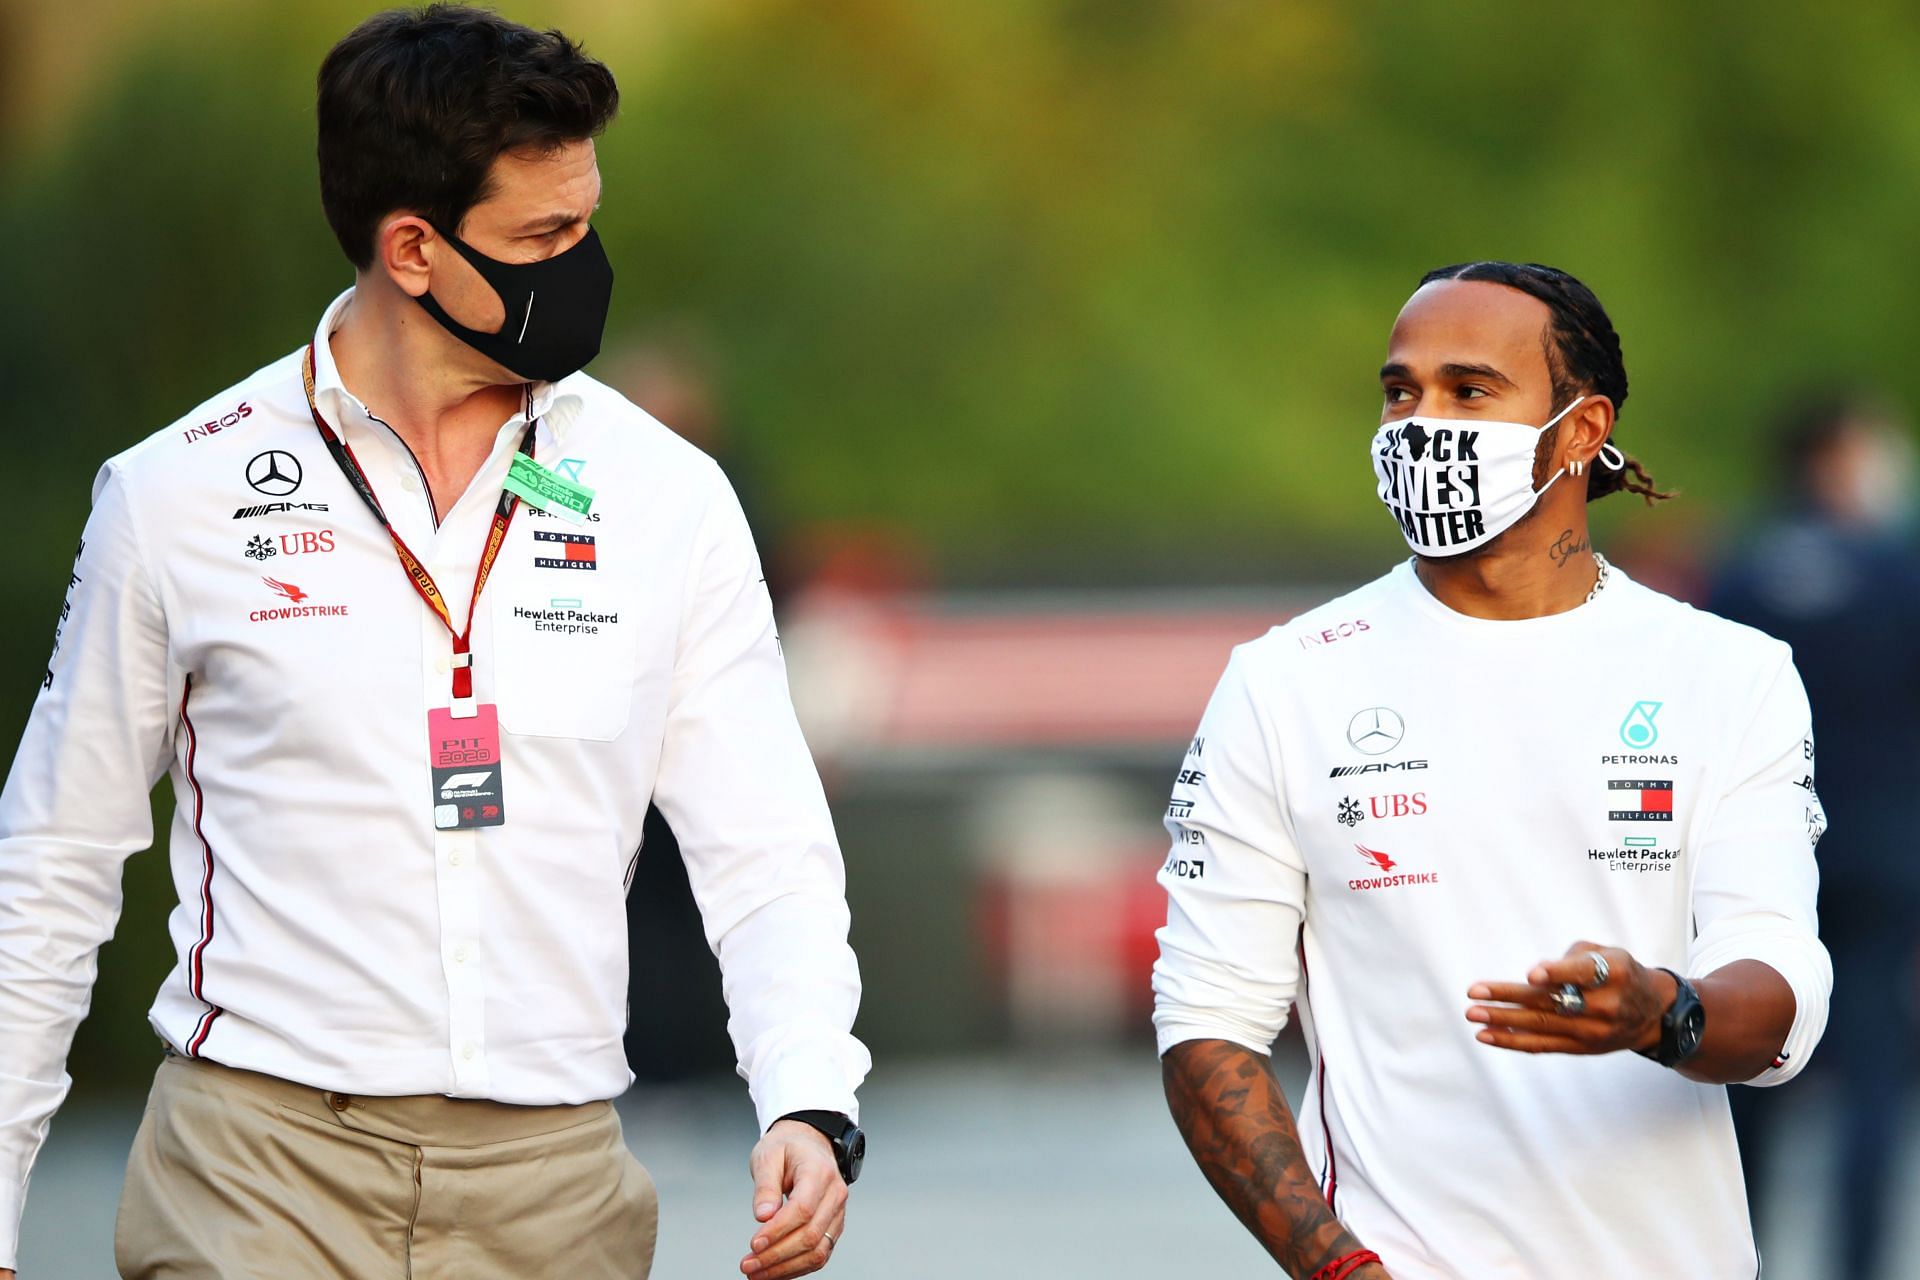 Toto Wolff (left) and Lewis Hamilton (right) at the 2022 Emilia Romagna Grand Prix.